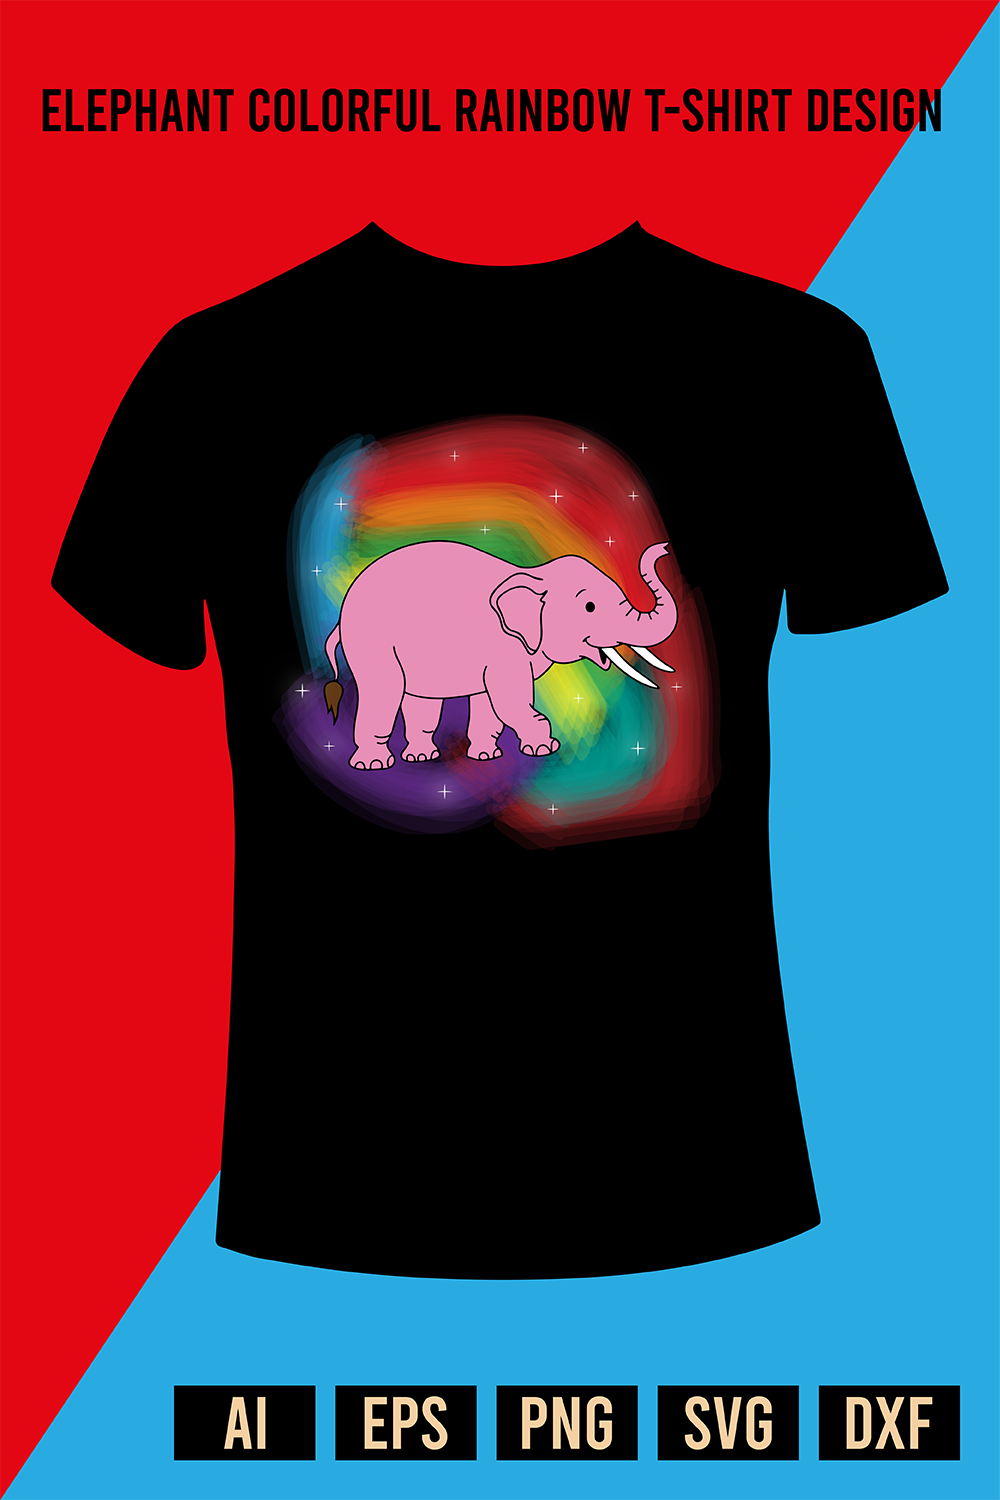 Elephant Colorful Rainbow T-Shirt Design pinterest preview image.